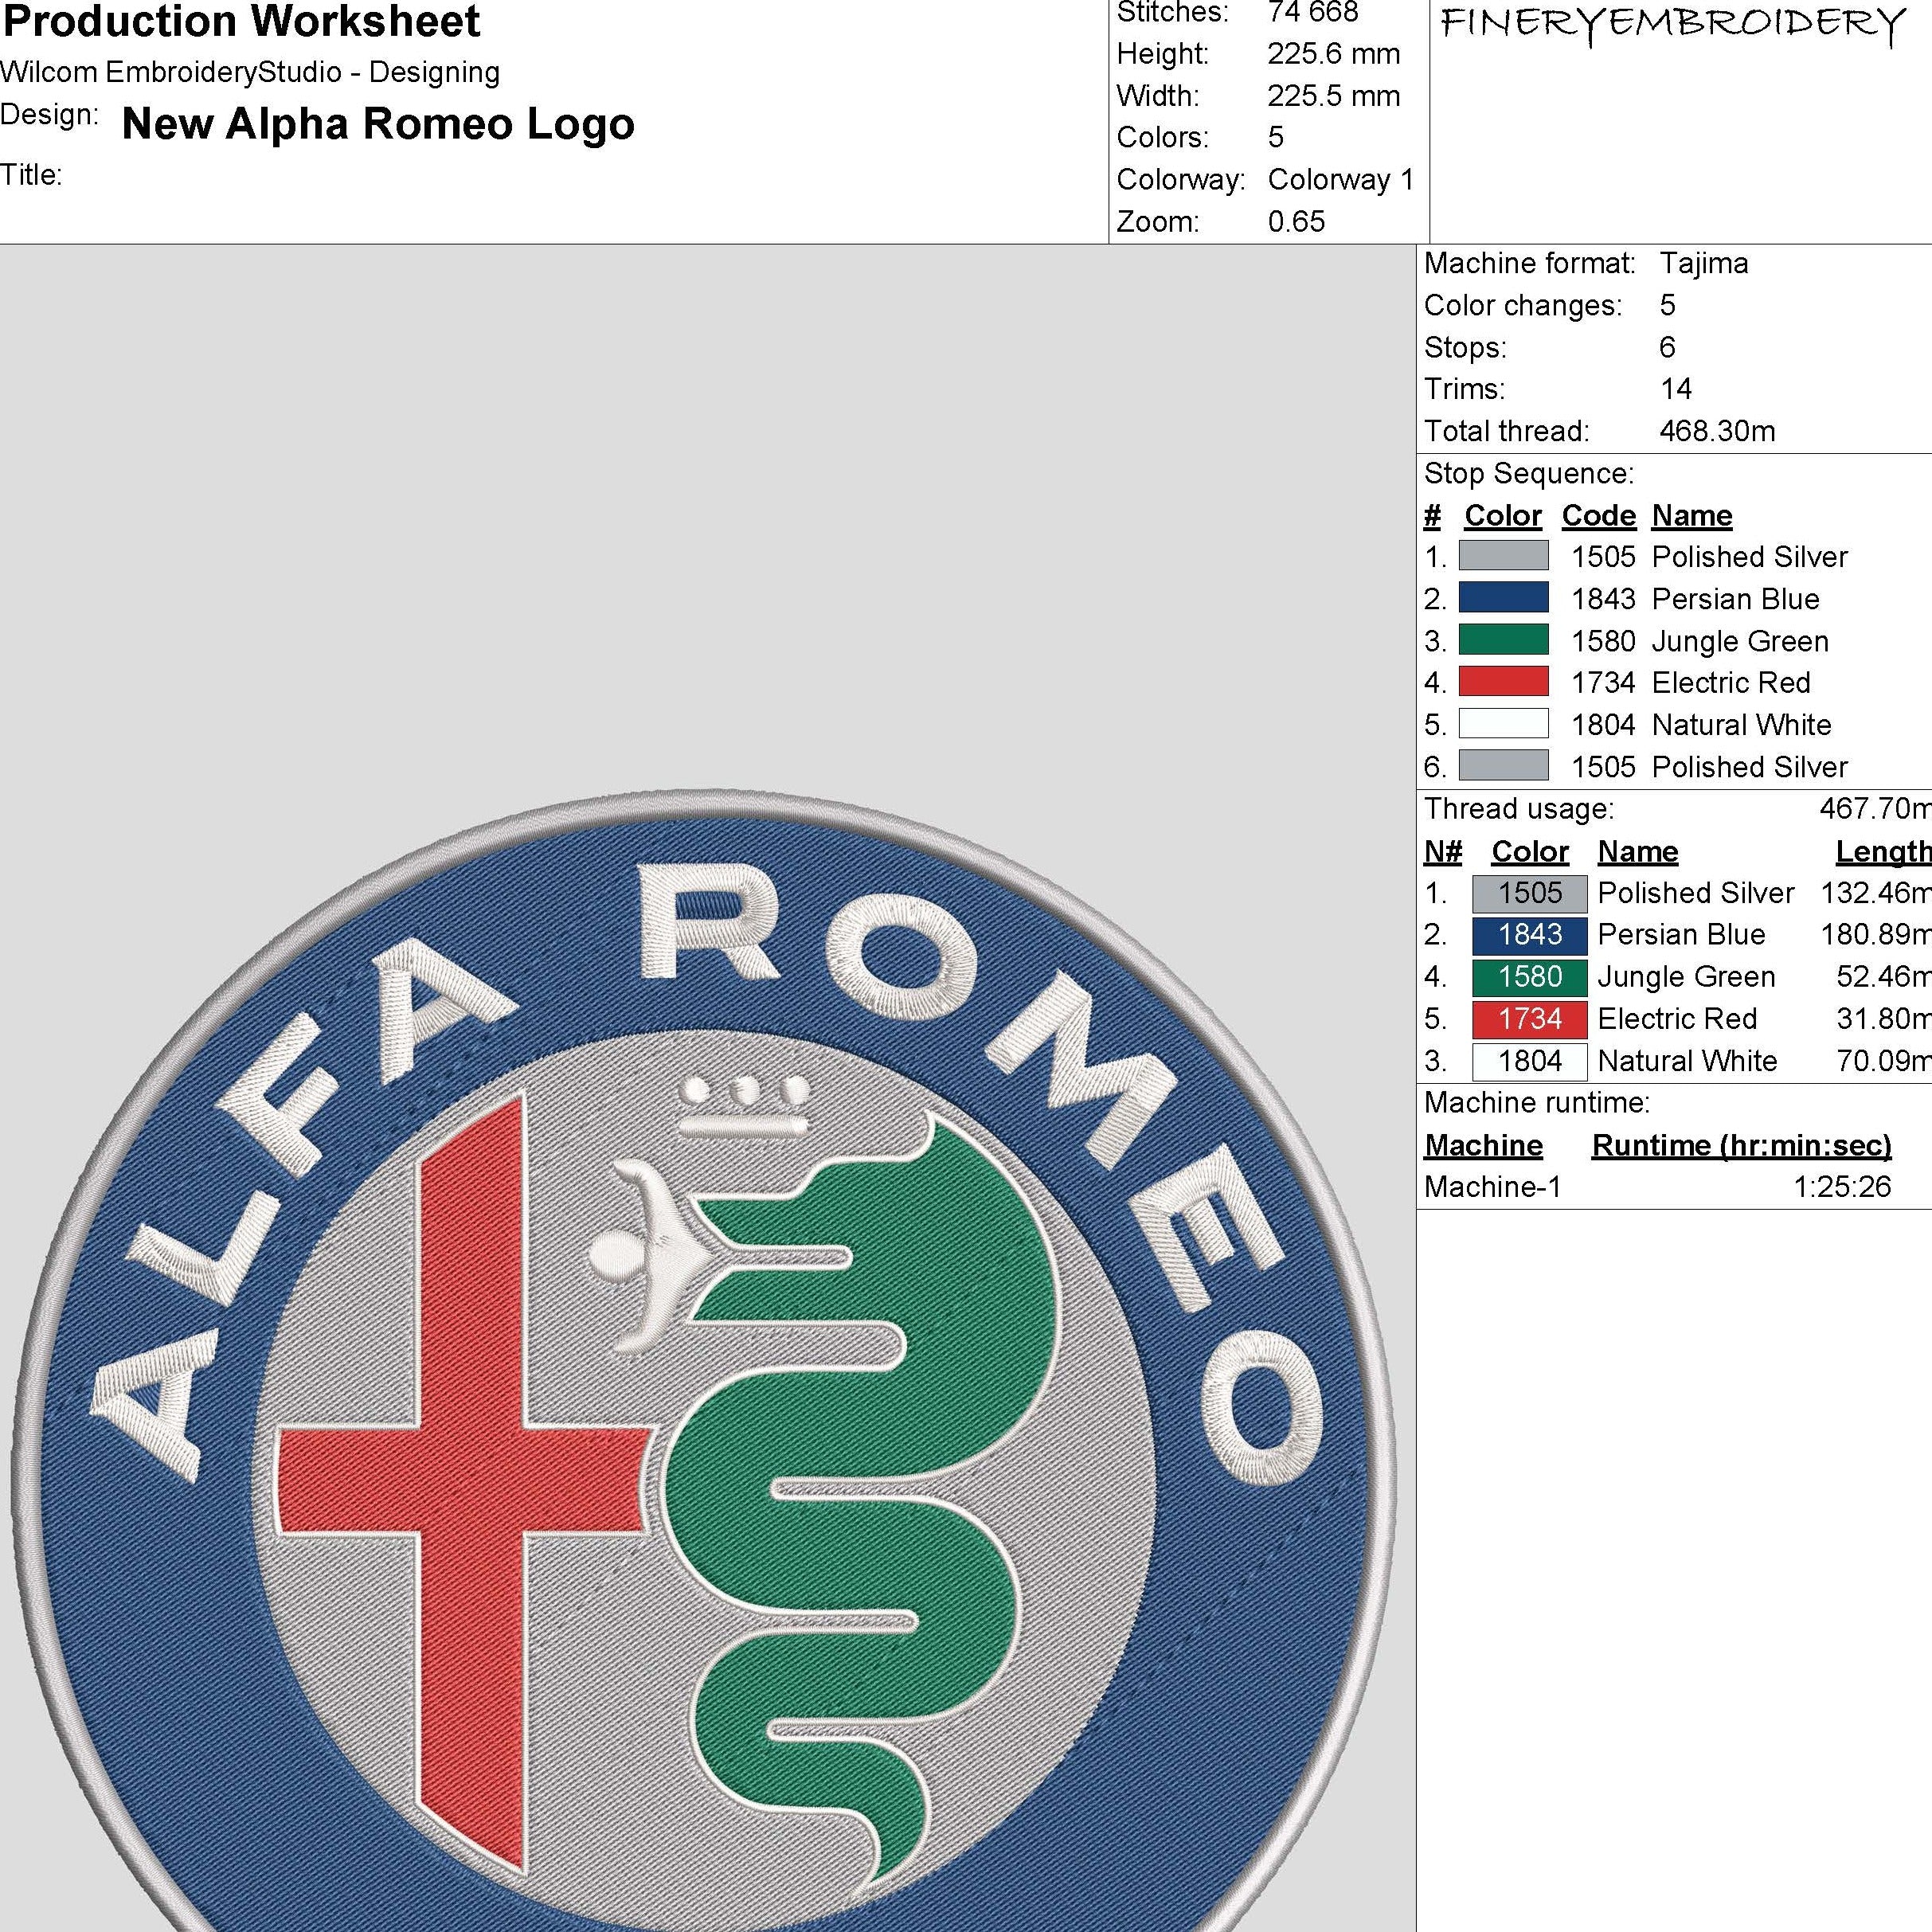 New Alpha Romeo Logo Embroidery Design